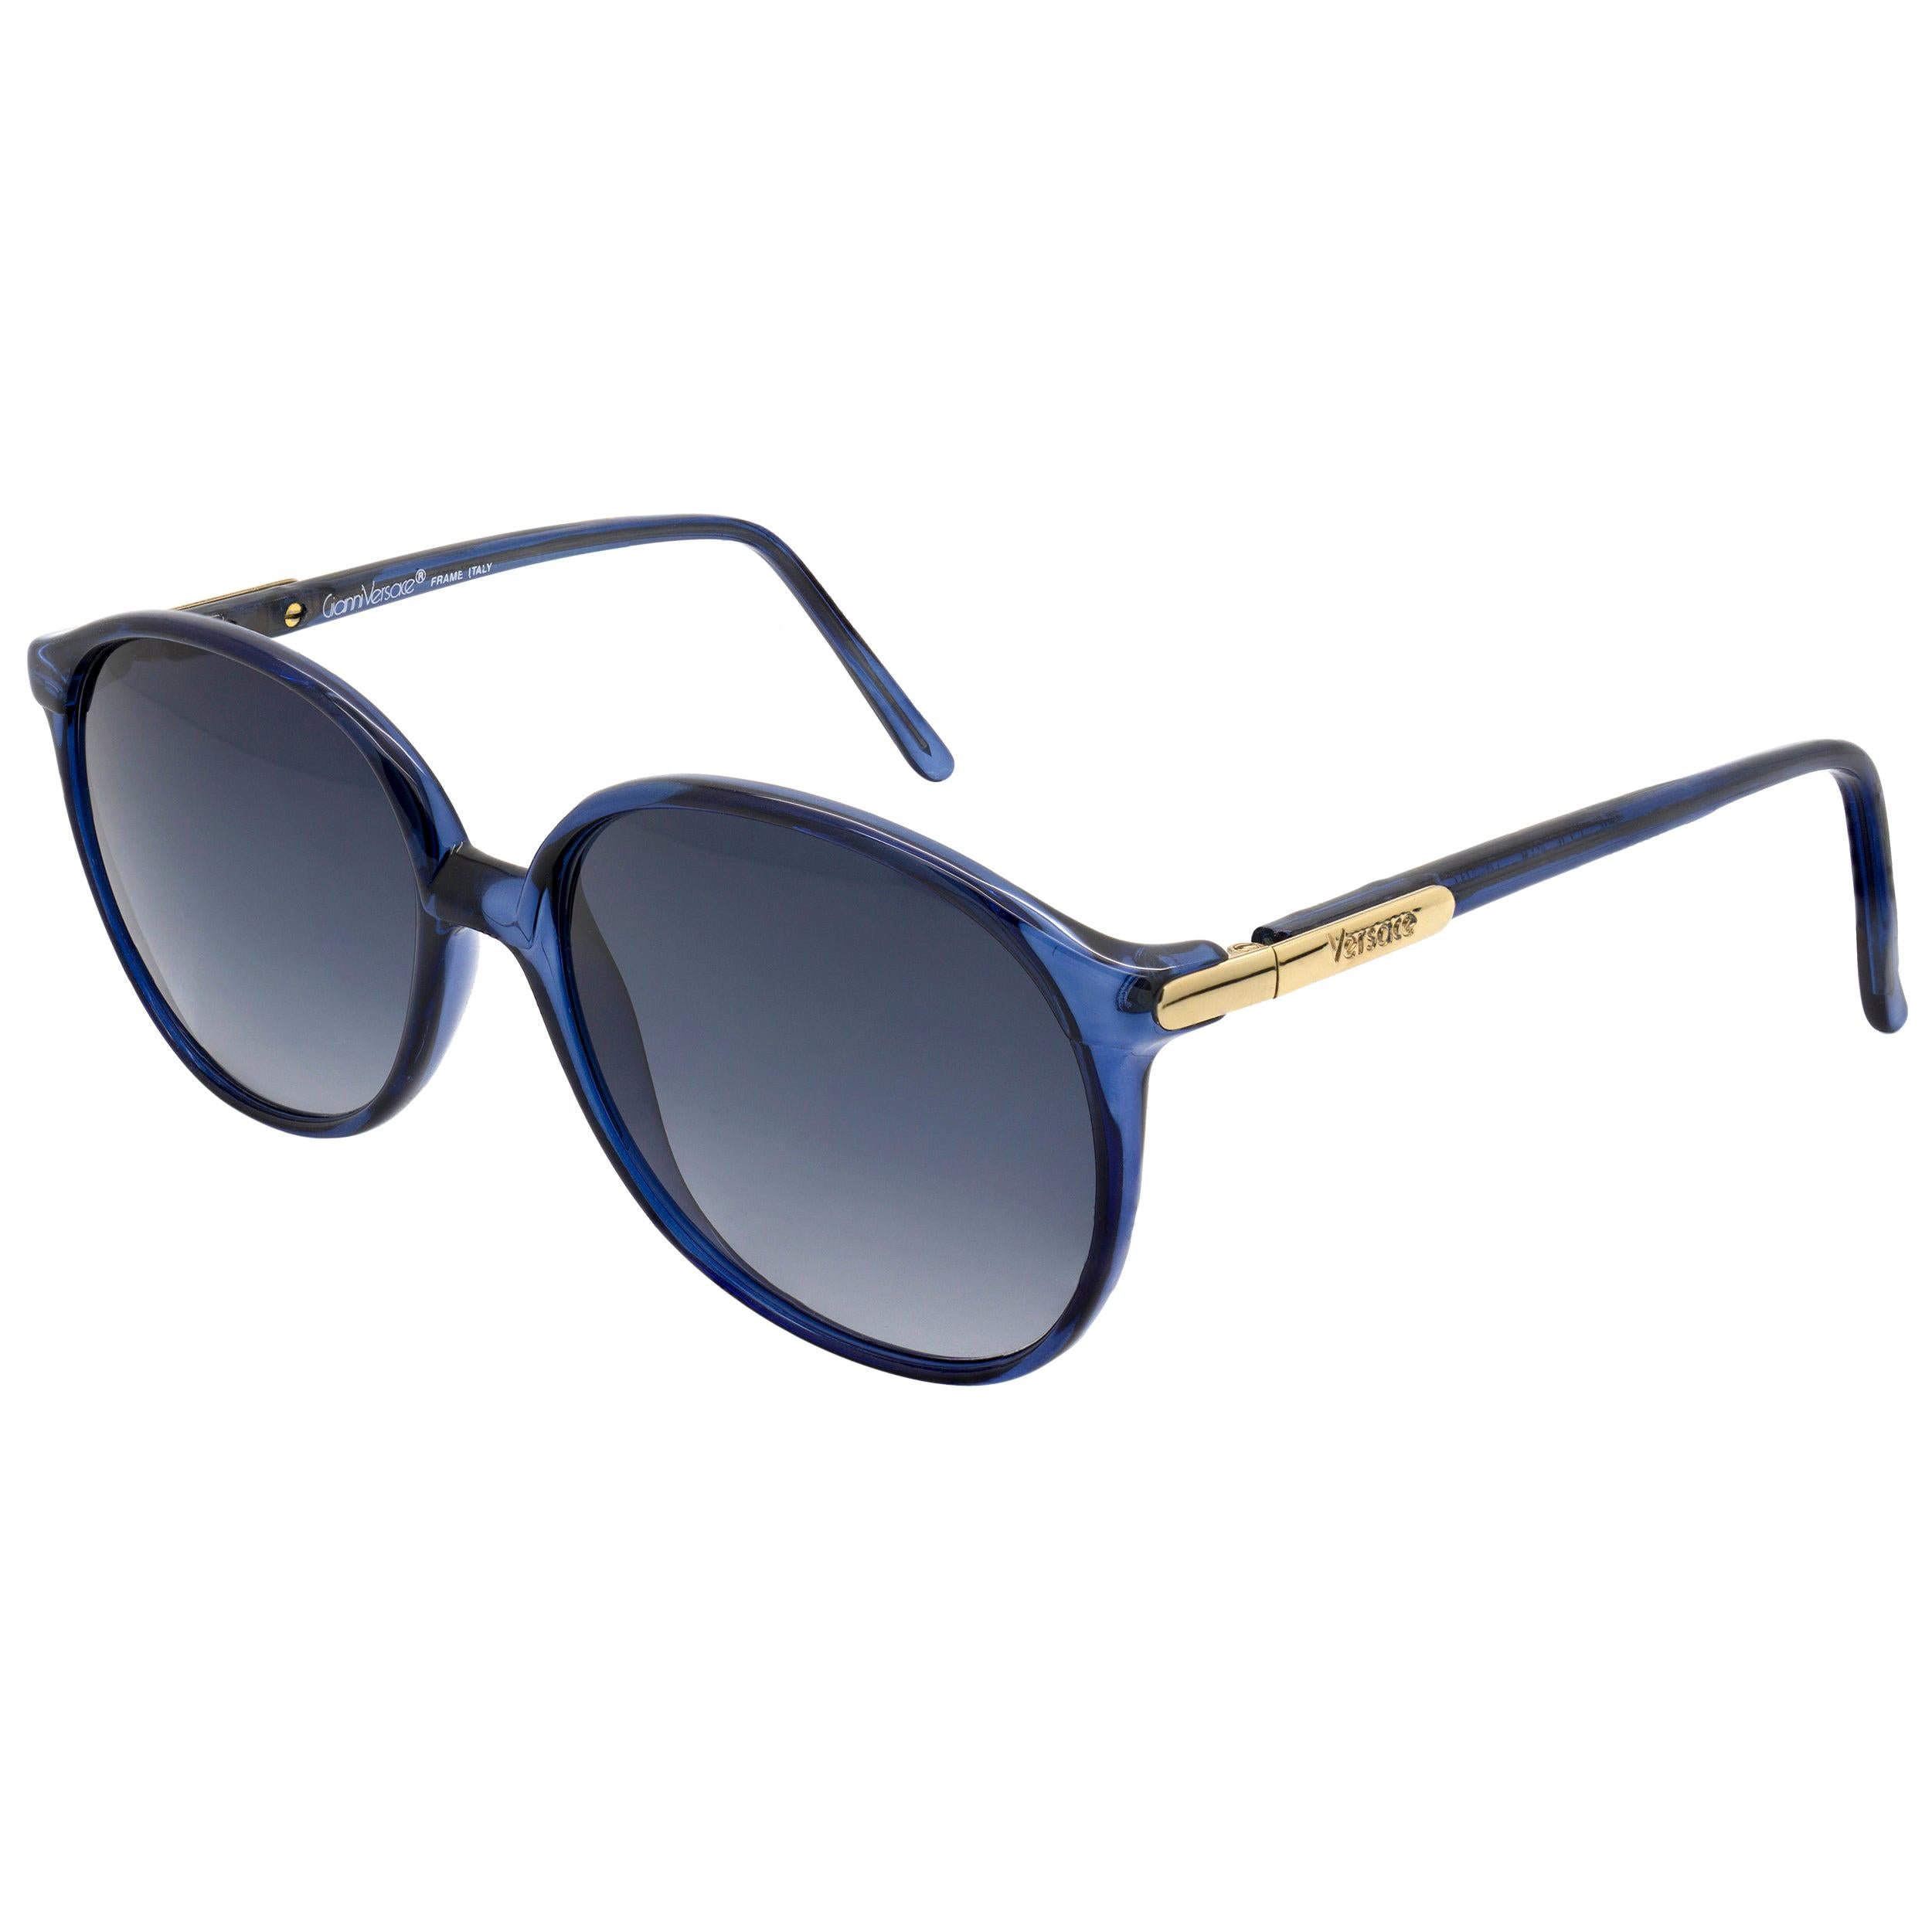 Gianni Versace sunglasses for women